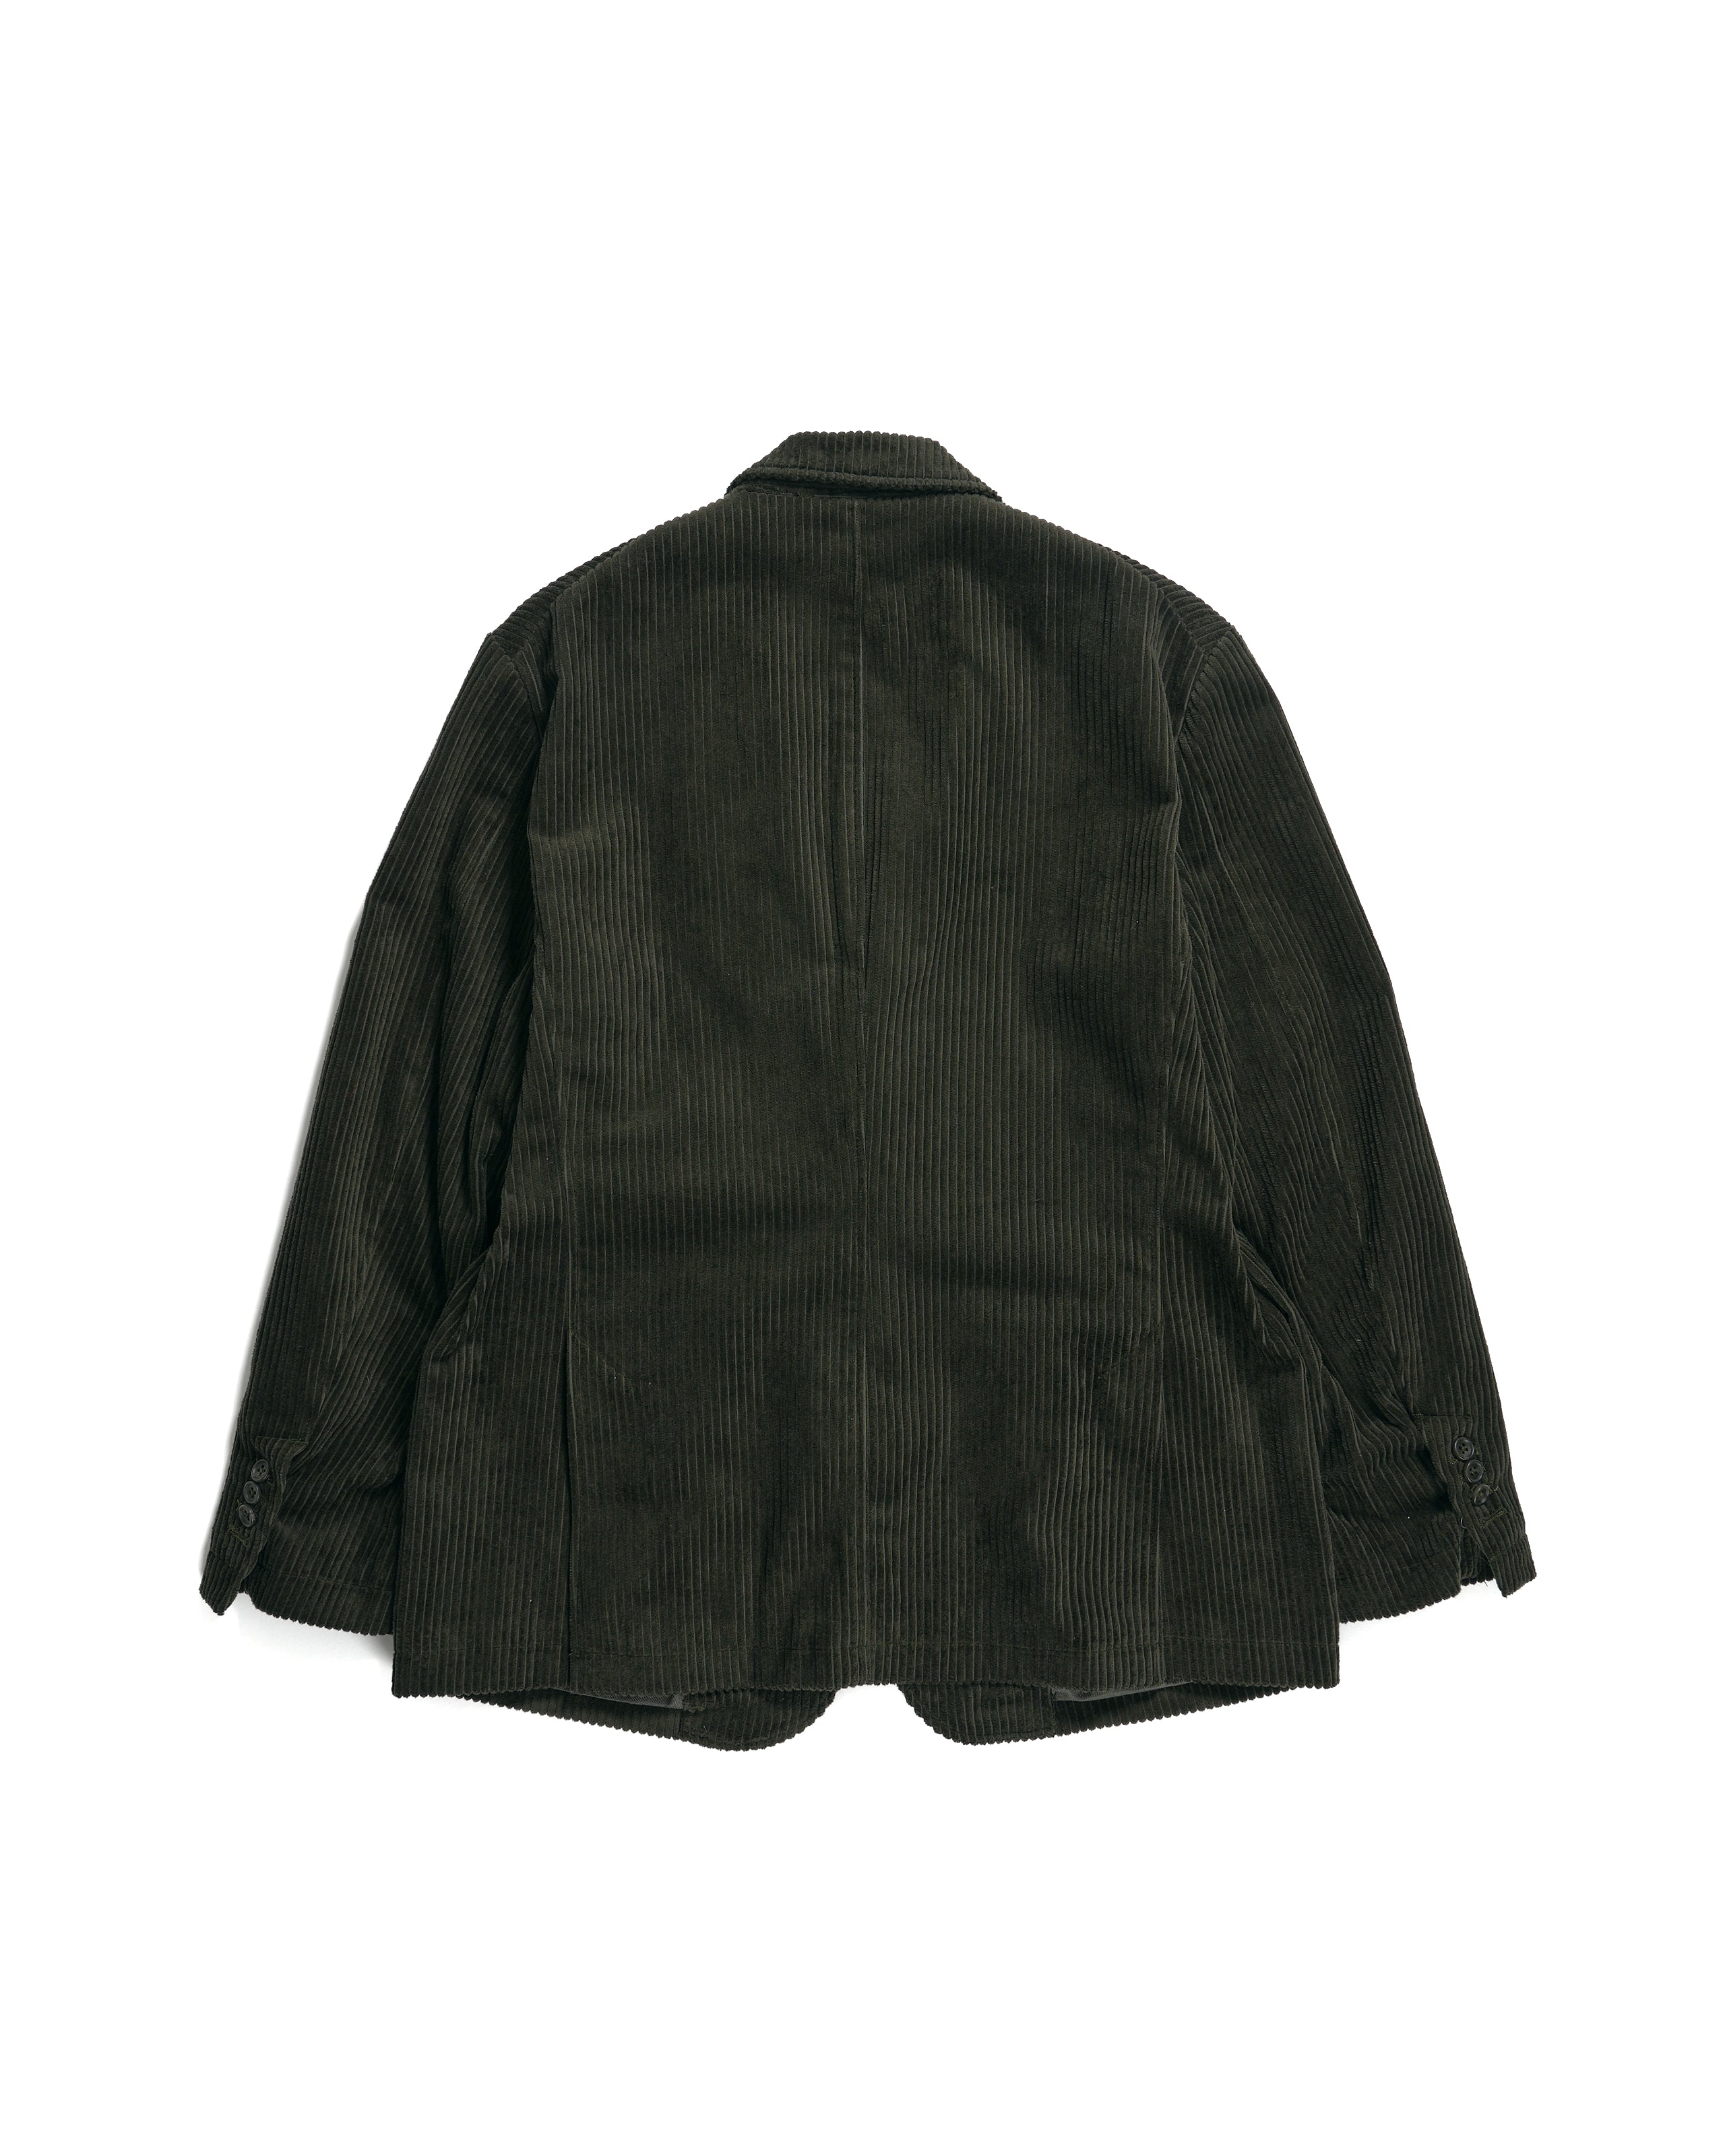 Engineered Garments Andover Jacket - Olive Cotton 4.5W Corduroy